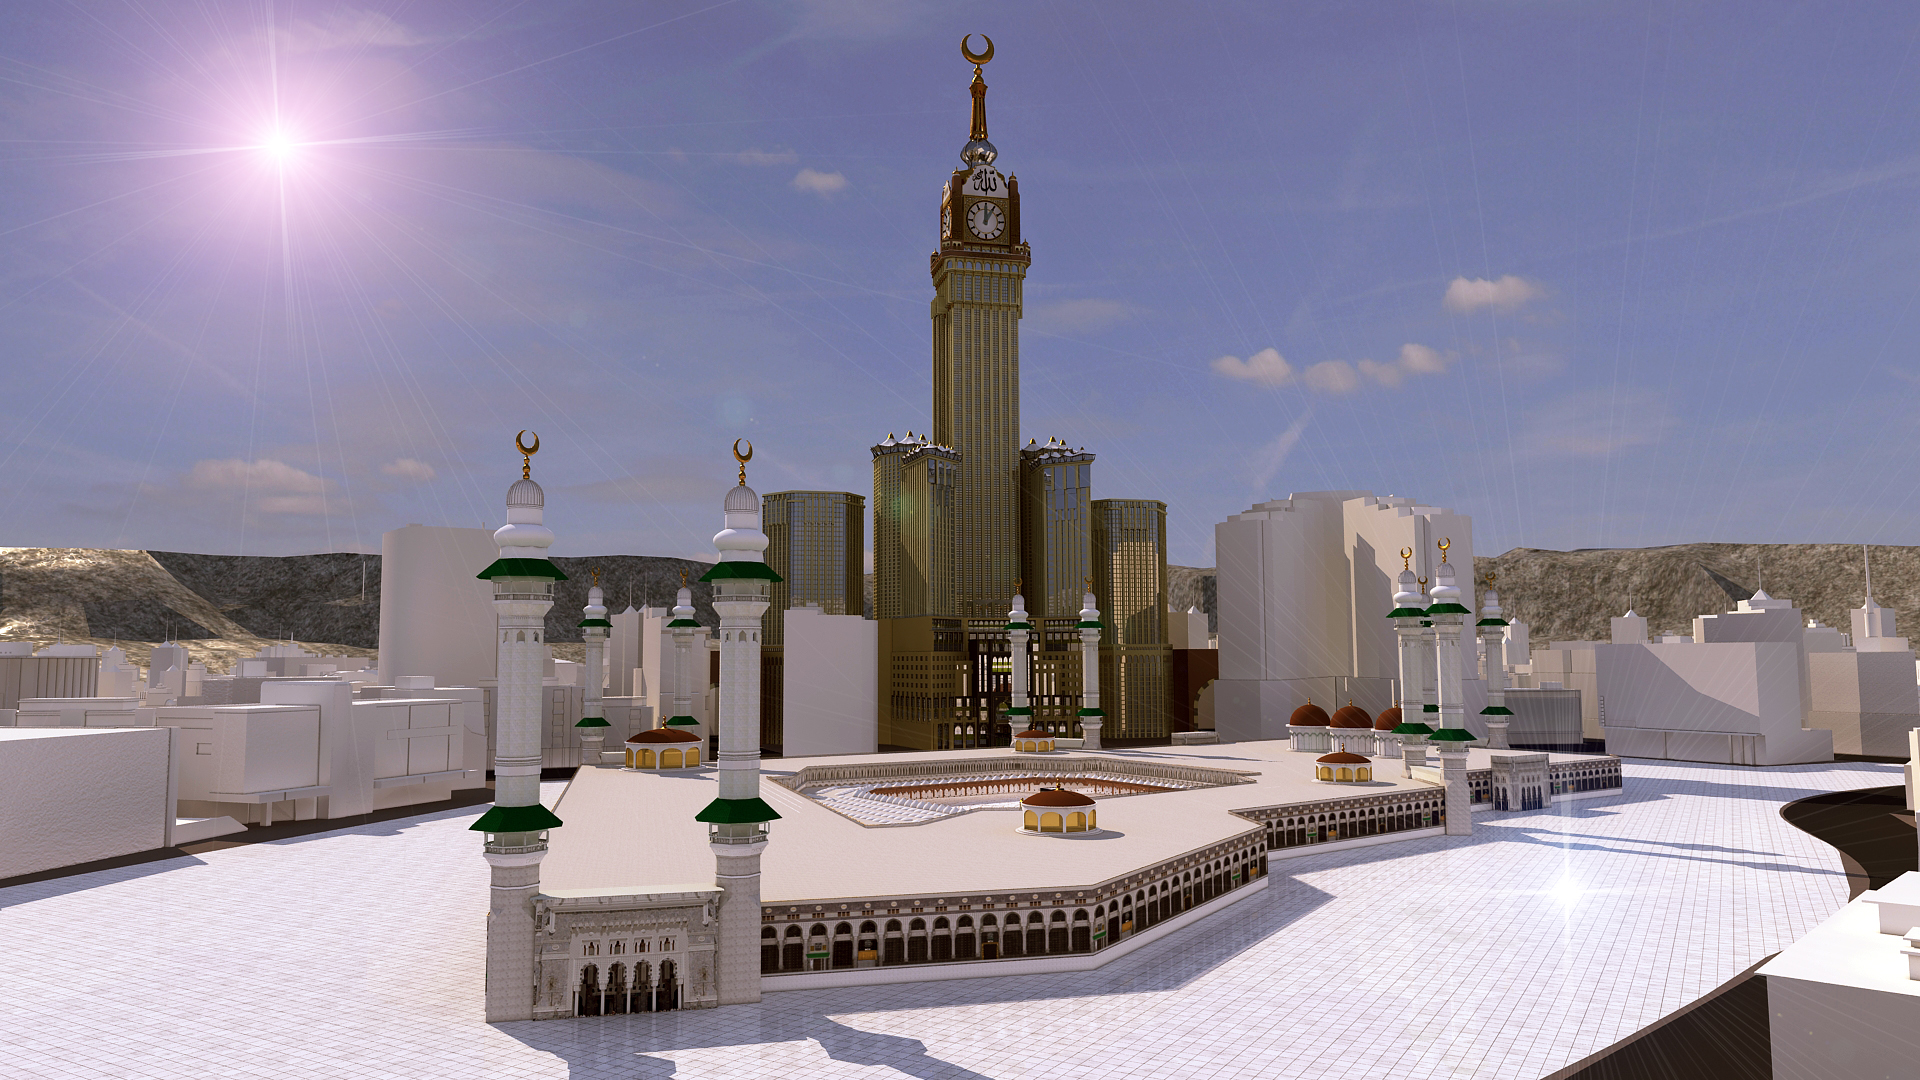 3 мекка. Кааба в Мекке. Масджид Аль-харам (Запретная мечеть) в Мекке. Башня Абрадж Аль-Бейт. Кааба минареты.